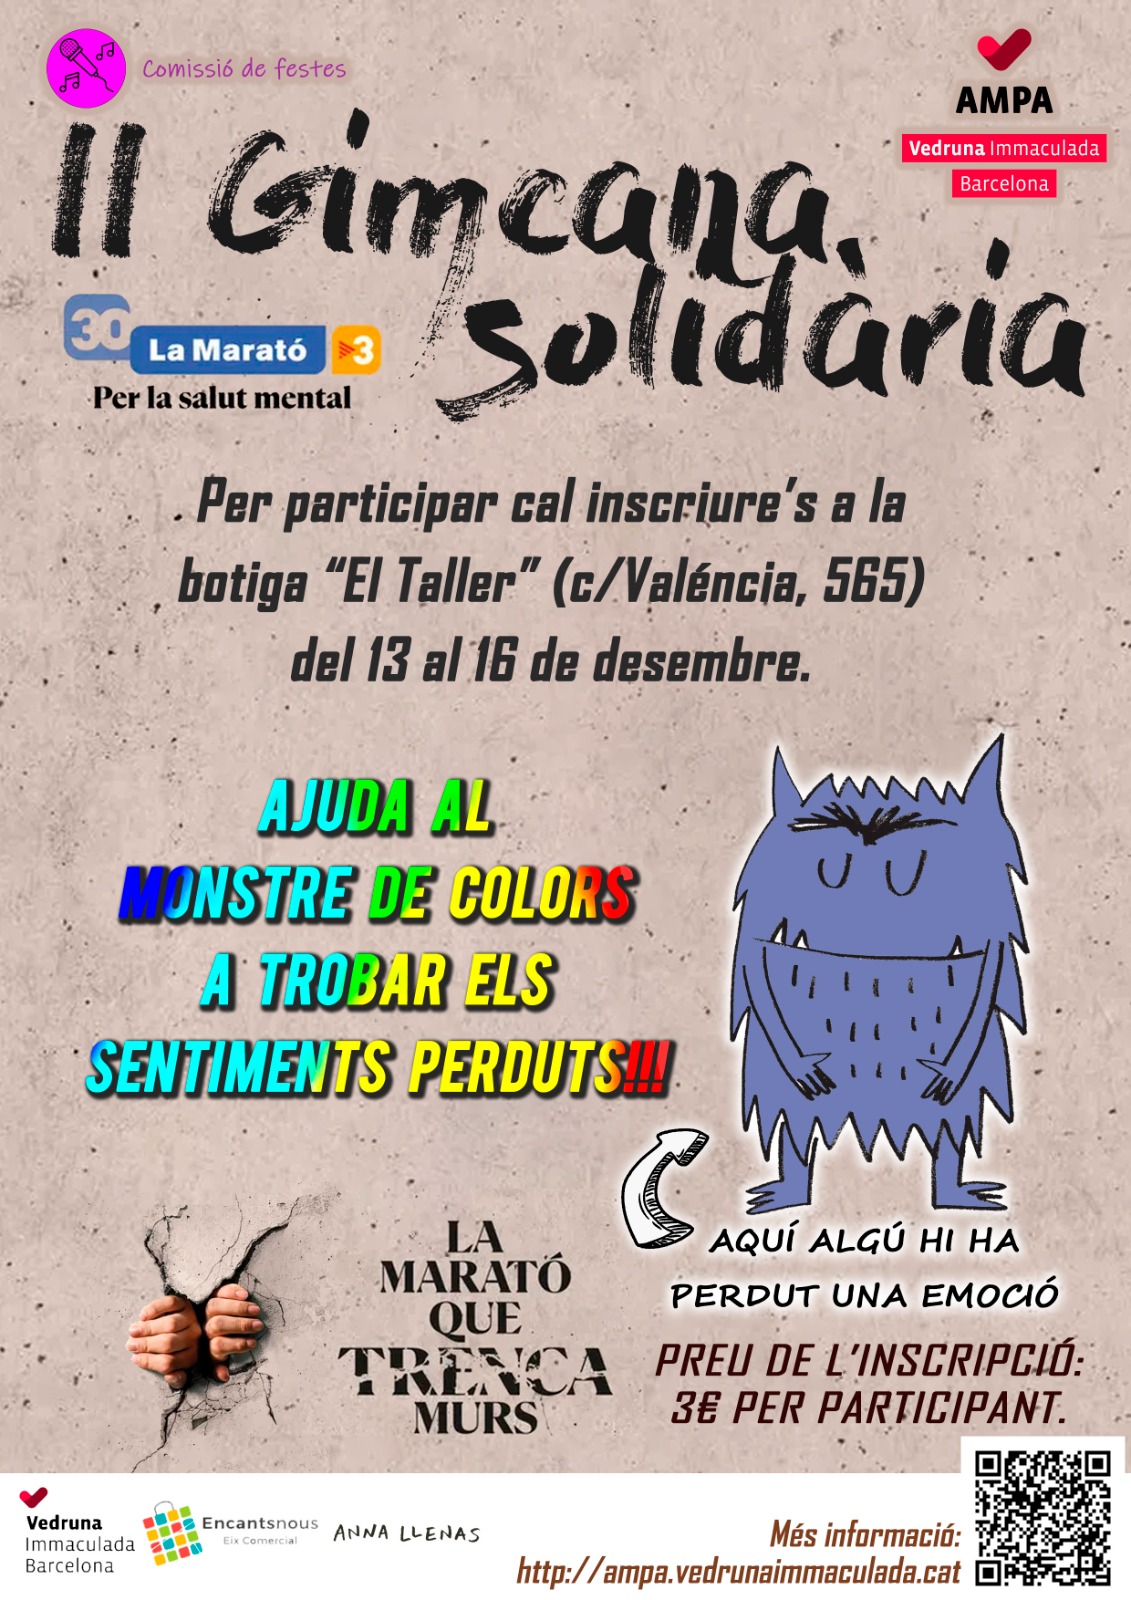 Gincana solidaria AMPA Vedruna Inmaculada - Encantsnous - El Maratón